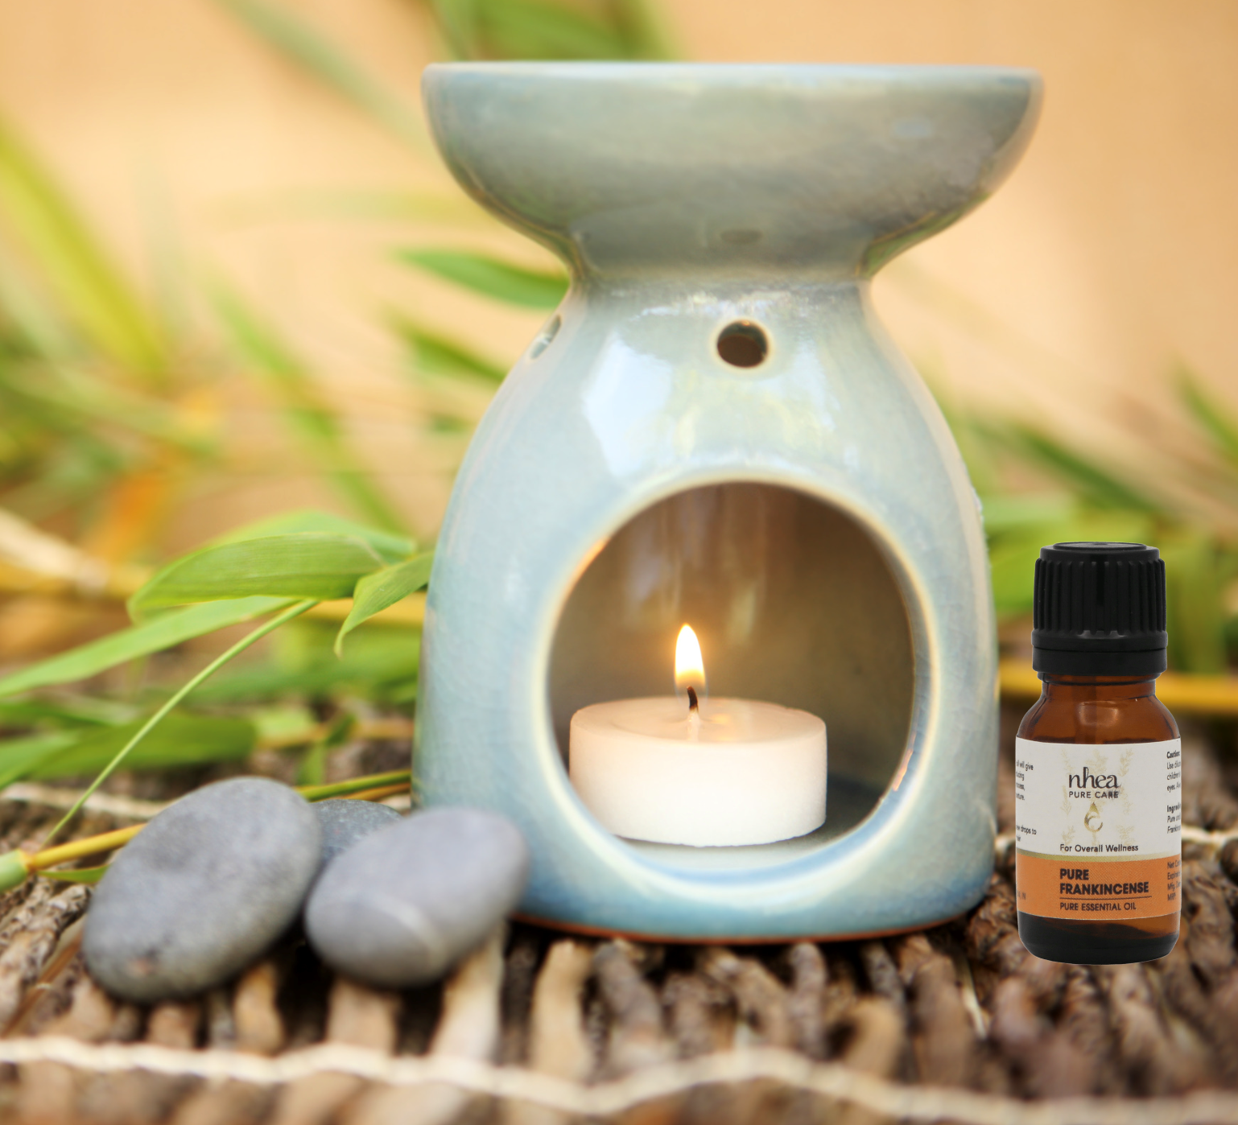 Nhea Pure Frankincense Essential Oil (10ml)